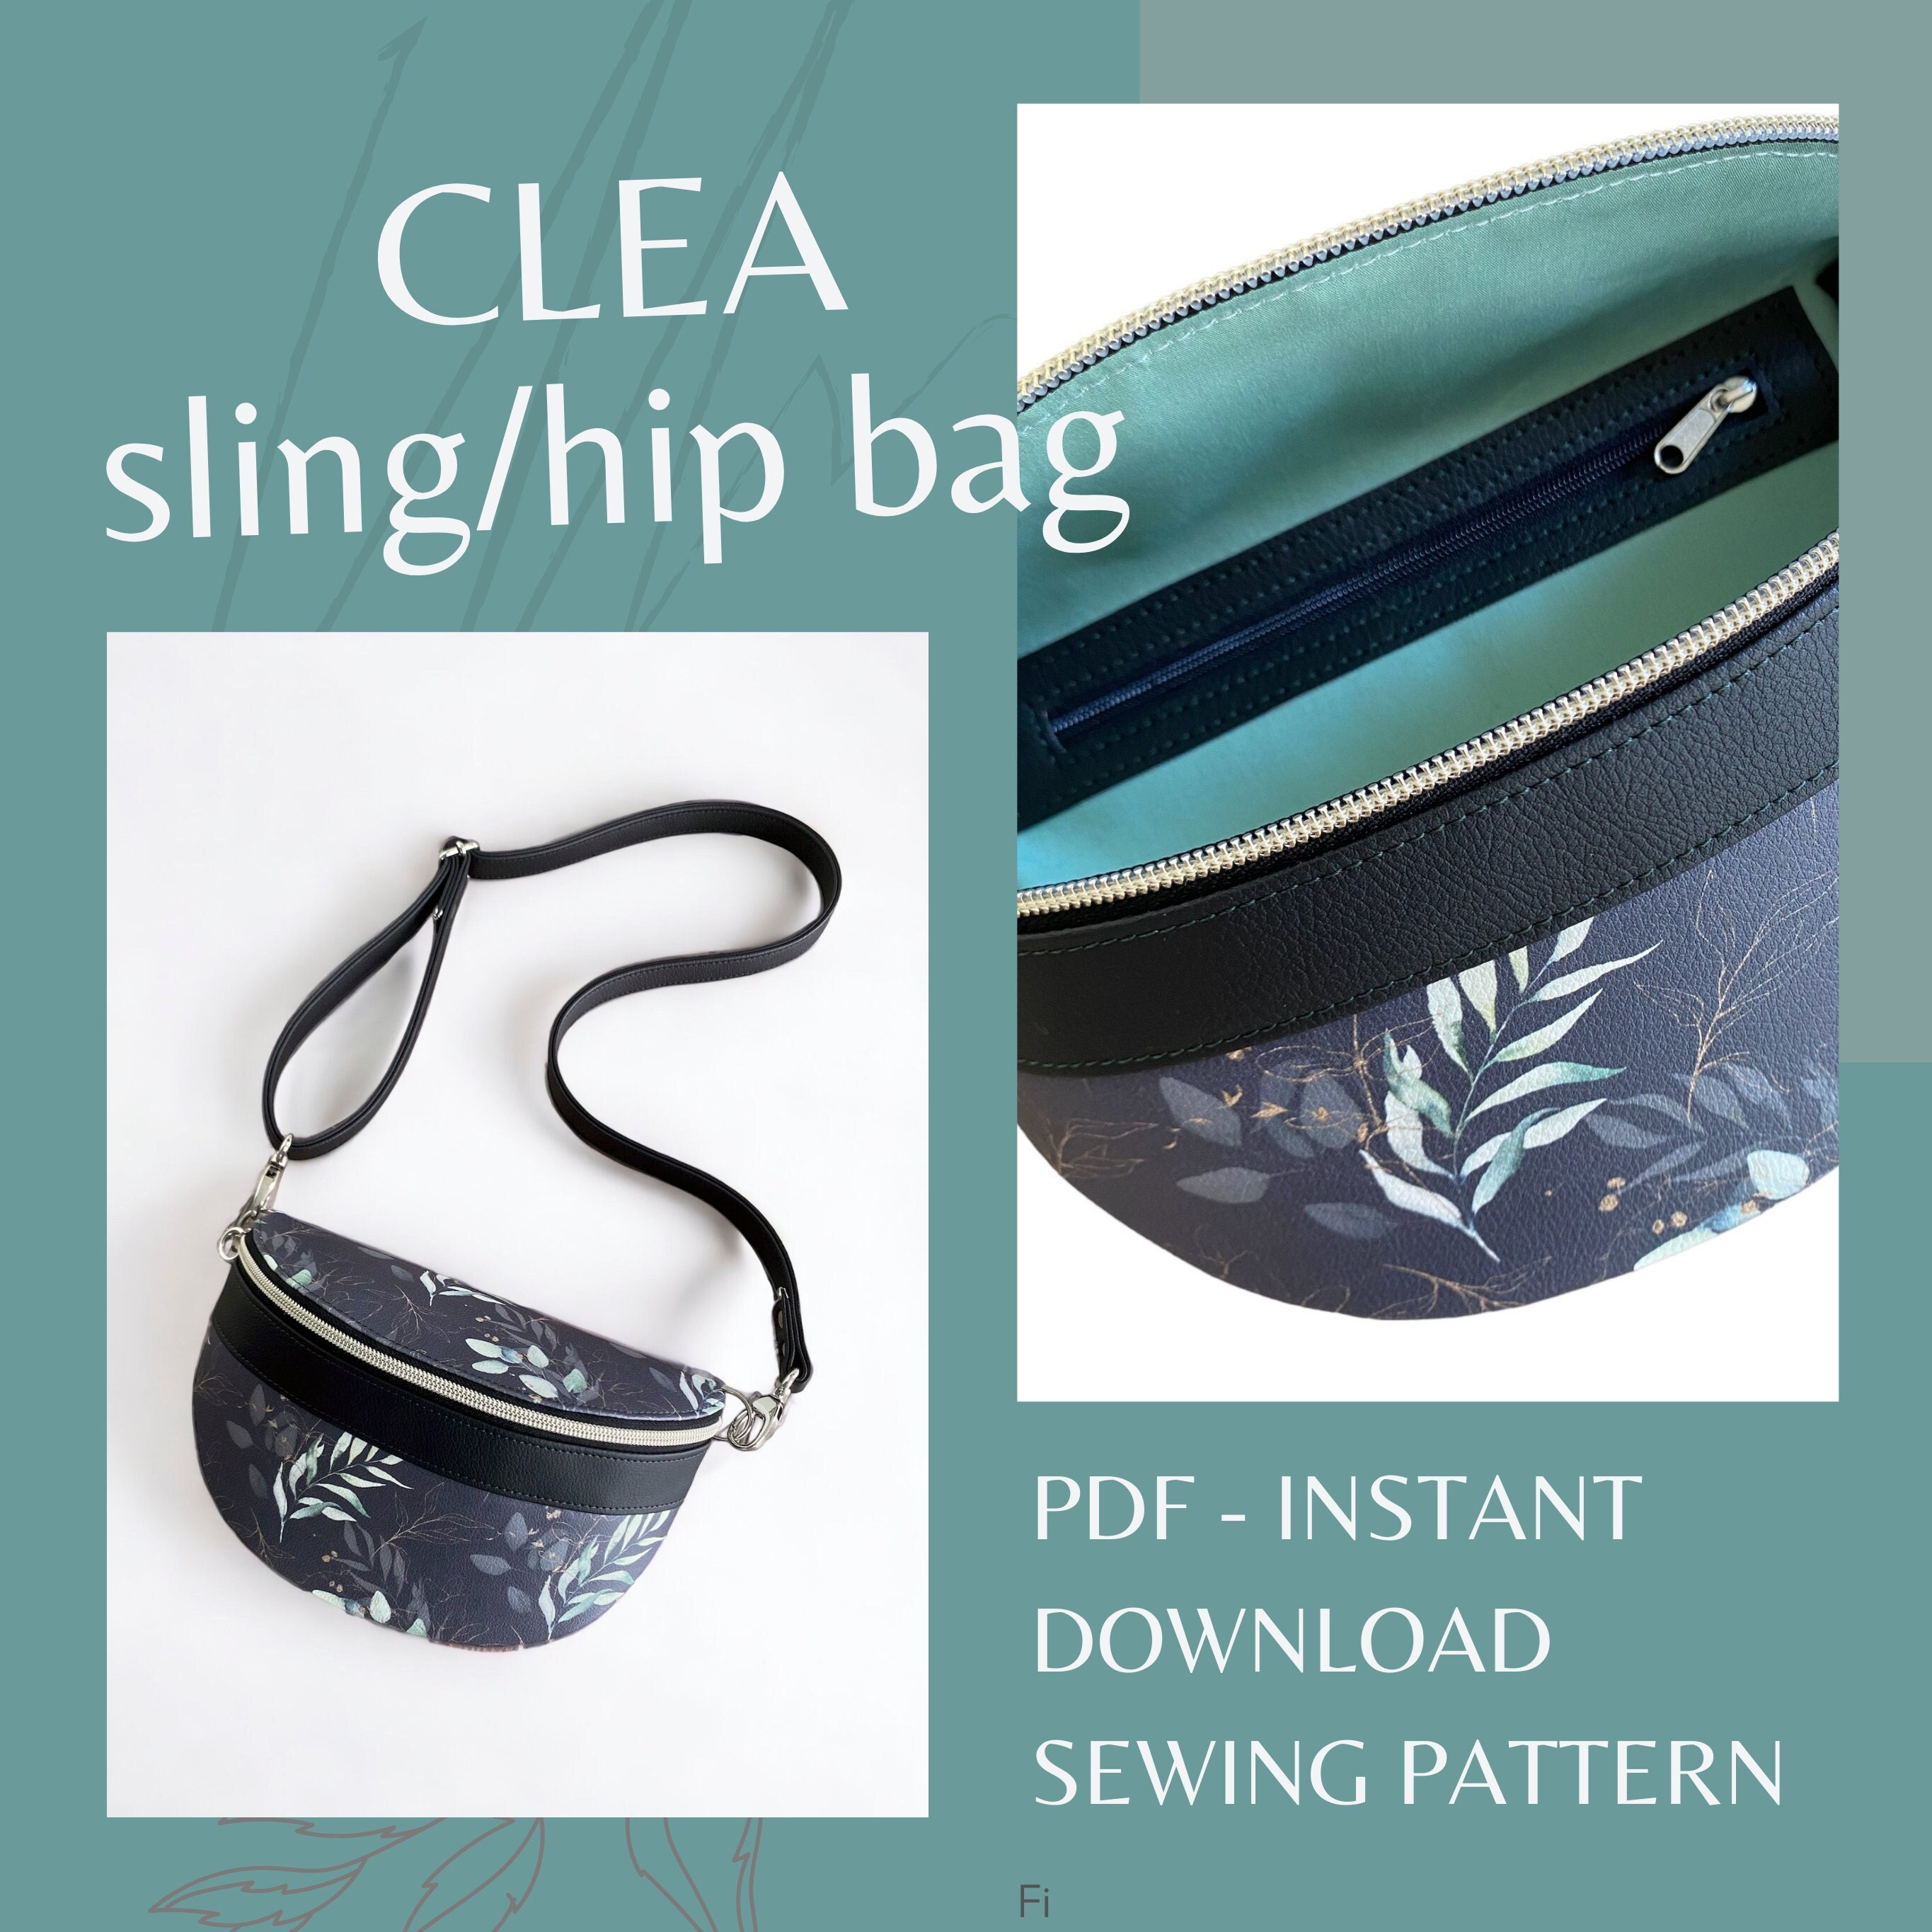 Chain Waist Bag Purse Women Belt Bags Stone Pattern Fanny Pack Fashion  23*17 CM